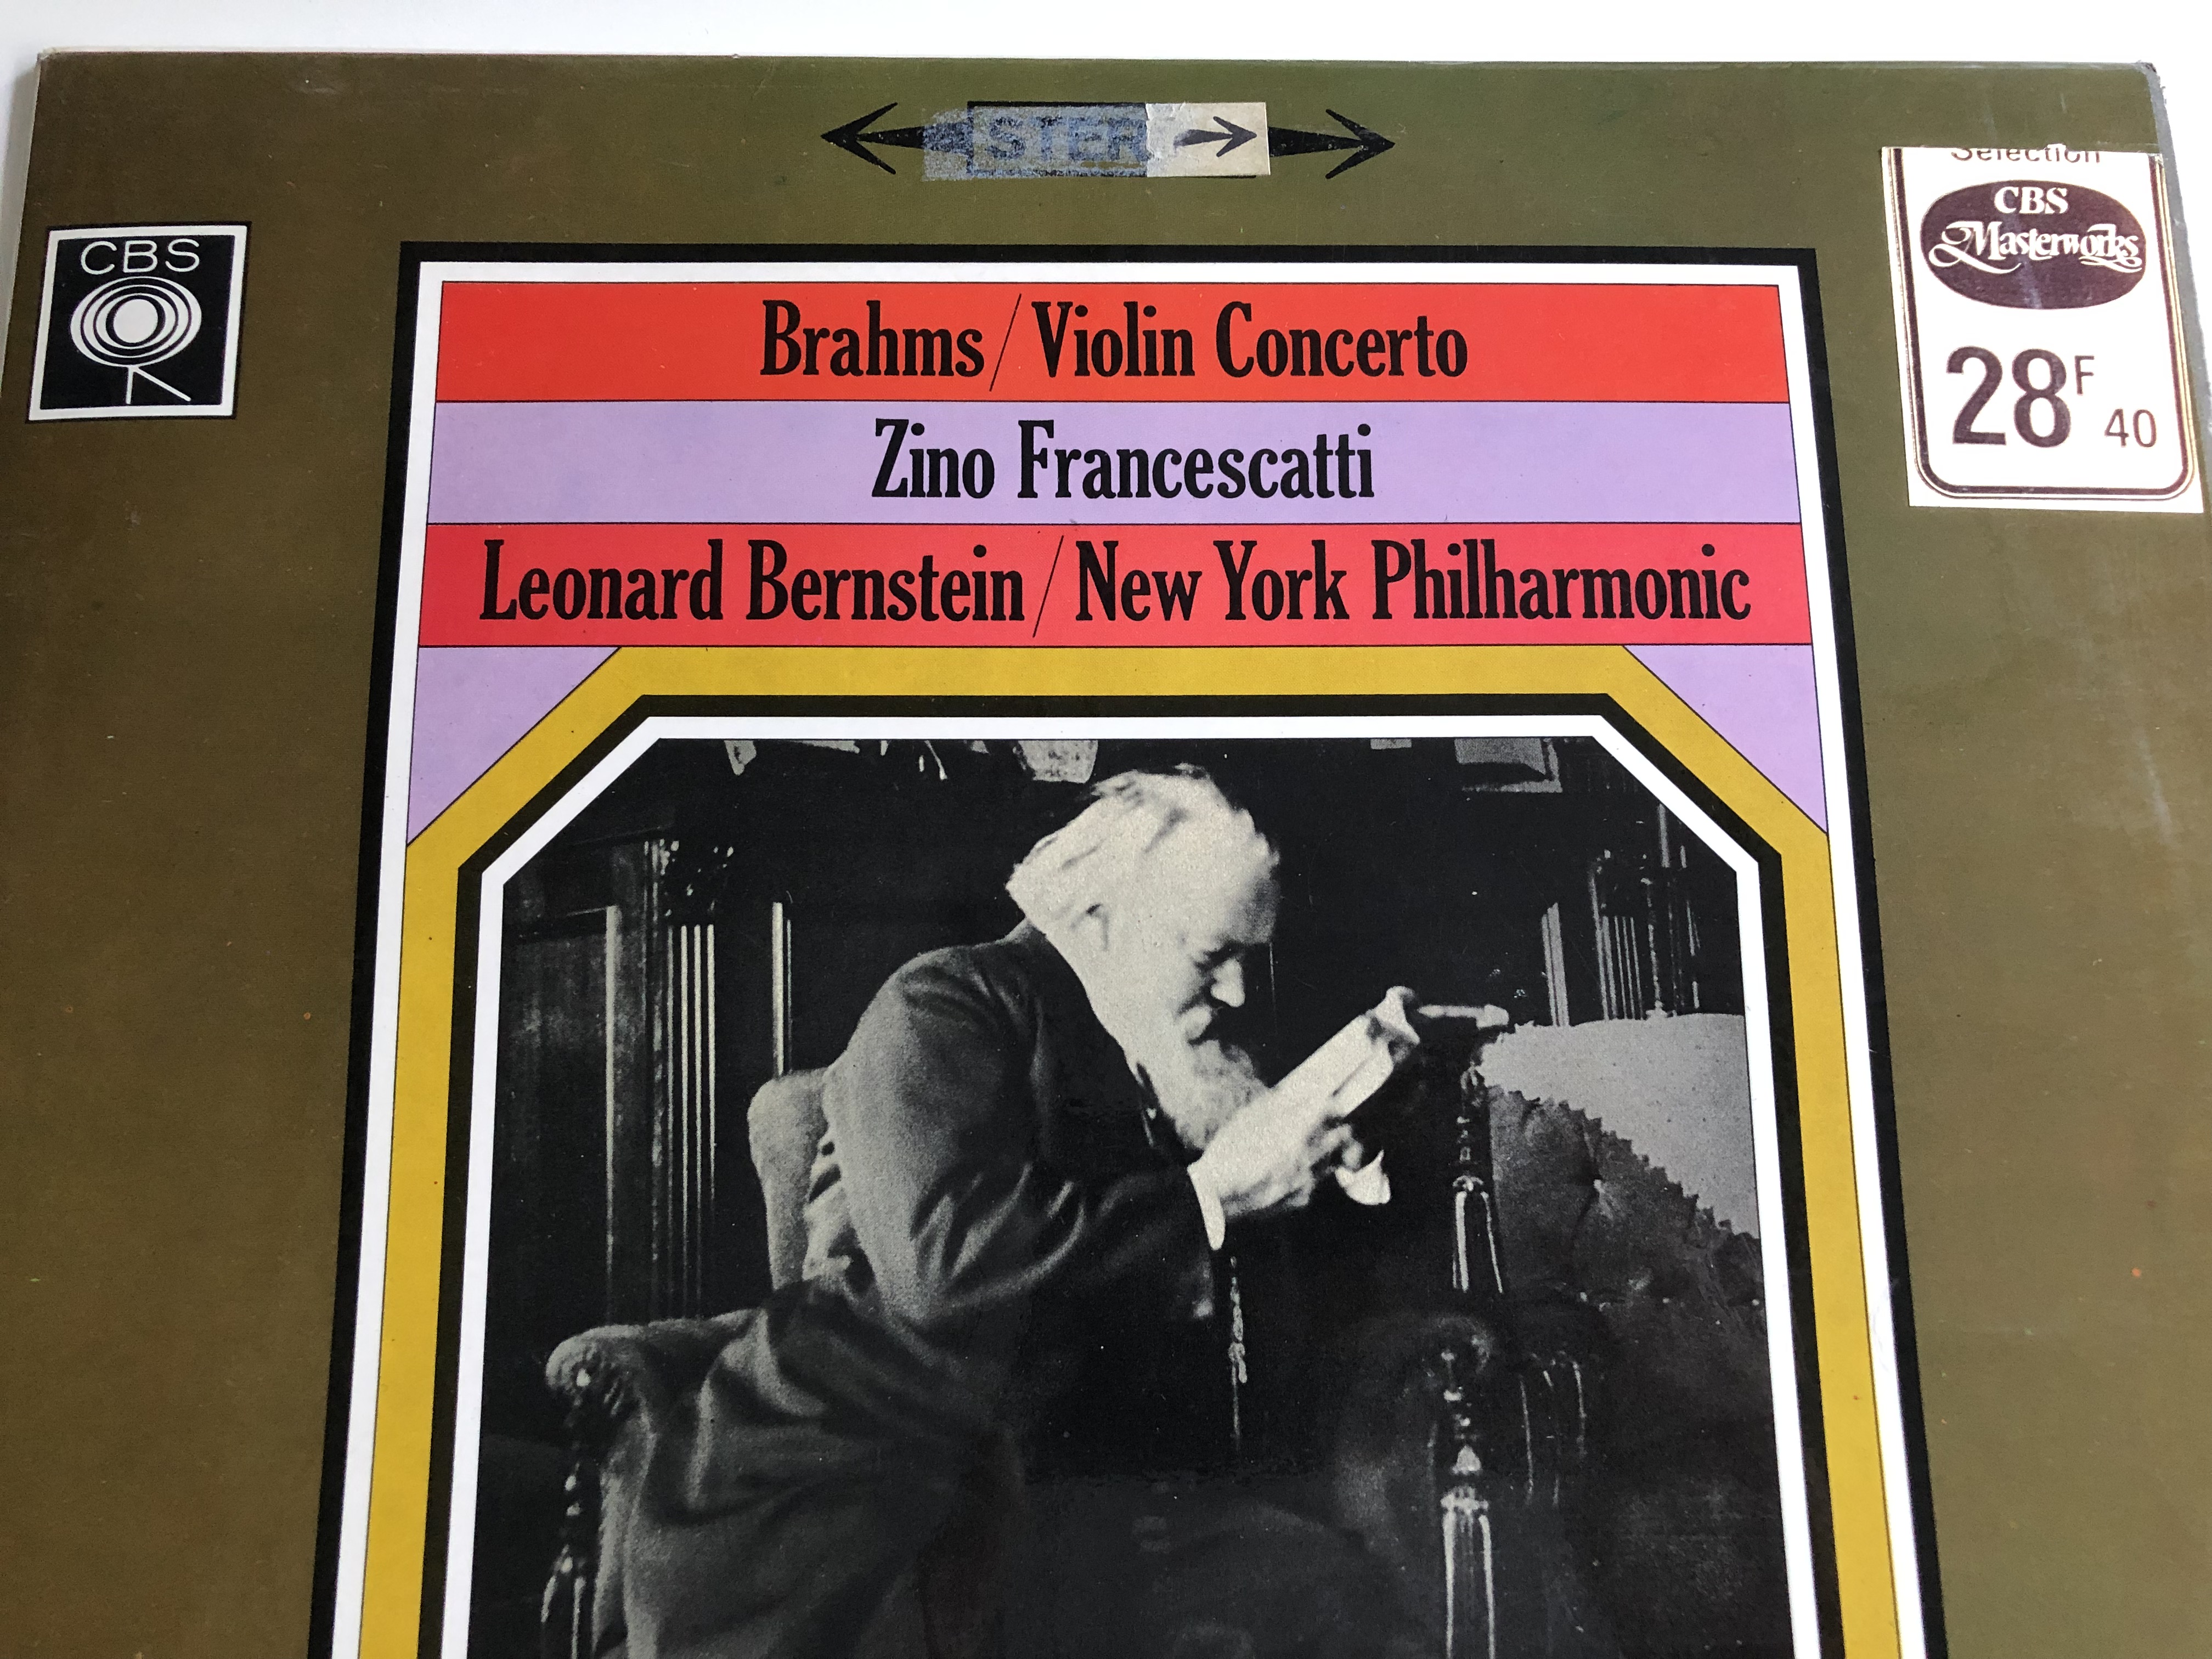 brahms-violin-concerto-zino-francescatti-leonard-bernstein-new-york-philharmonic-cbs-lp-stereo-sbrg-72130-2-.jpg